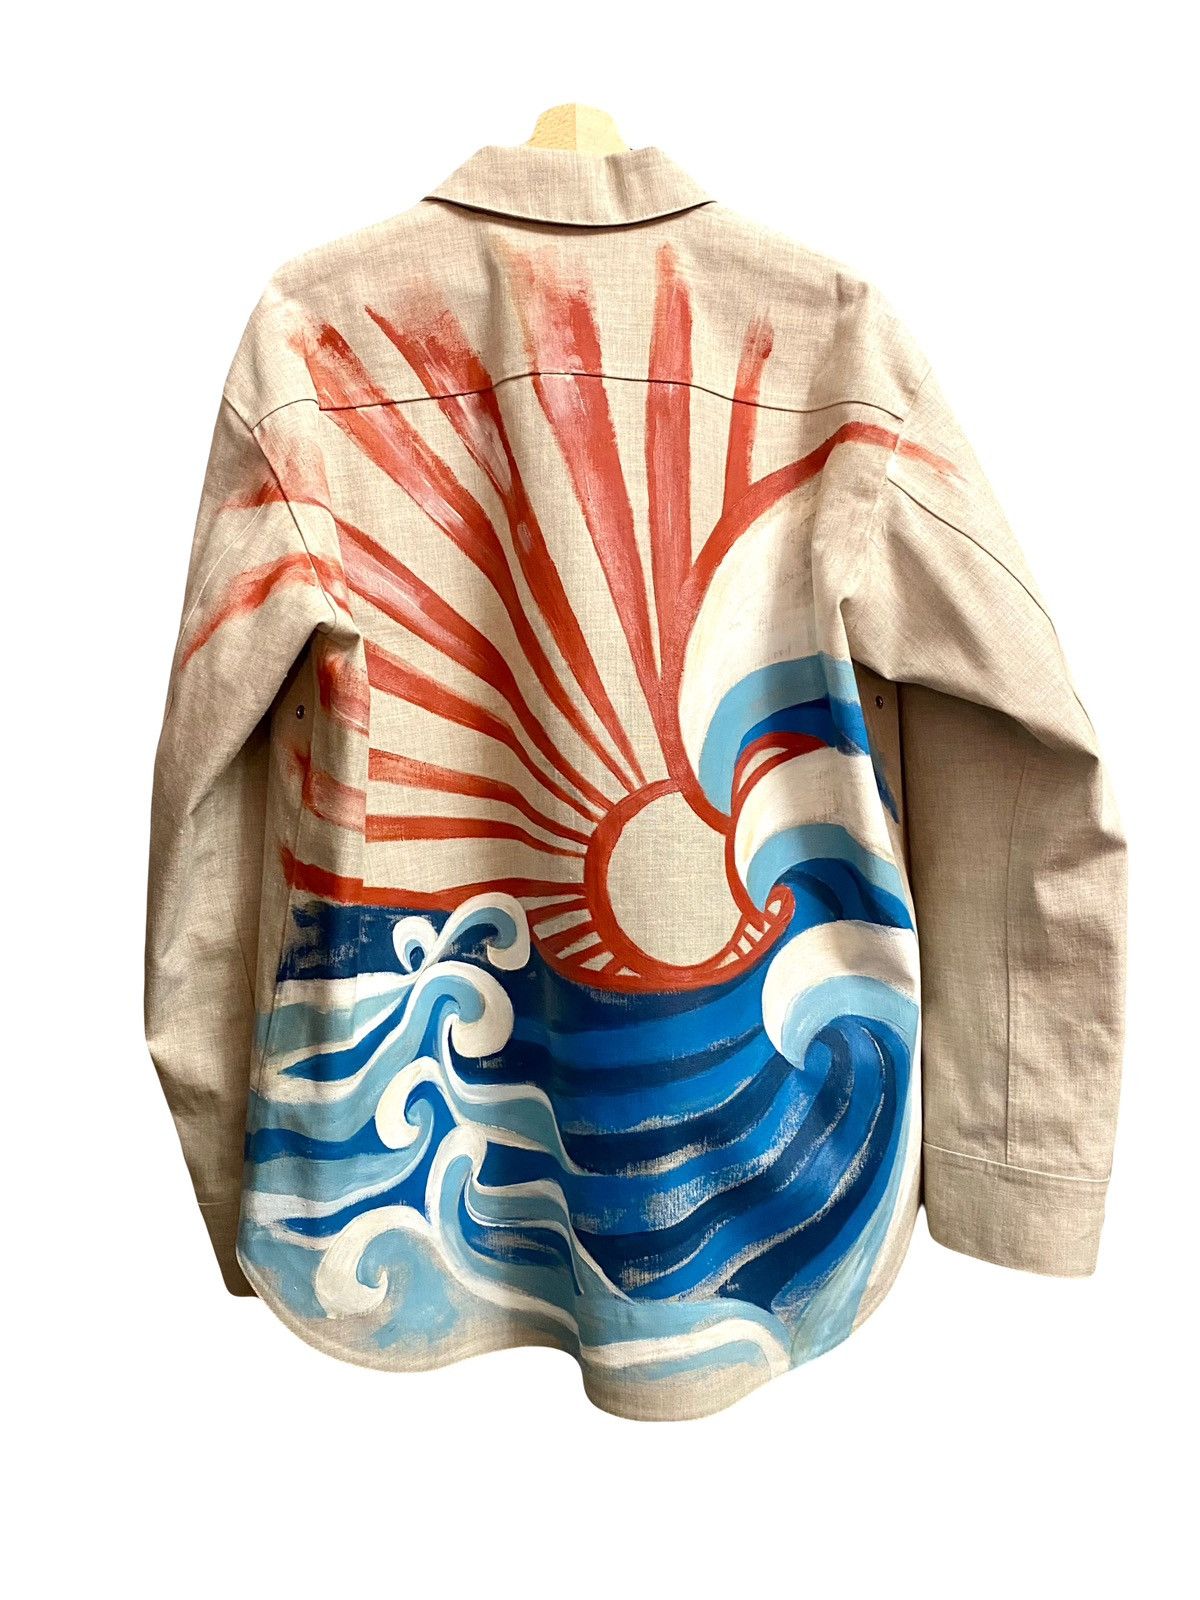 Jil Sander Jil sander X Mackintosh fall 2019 painted jacket | Grailed